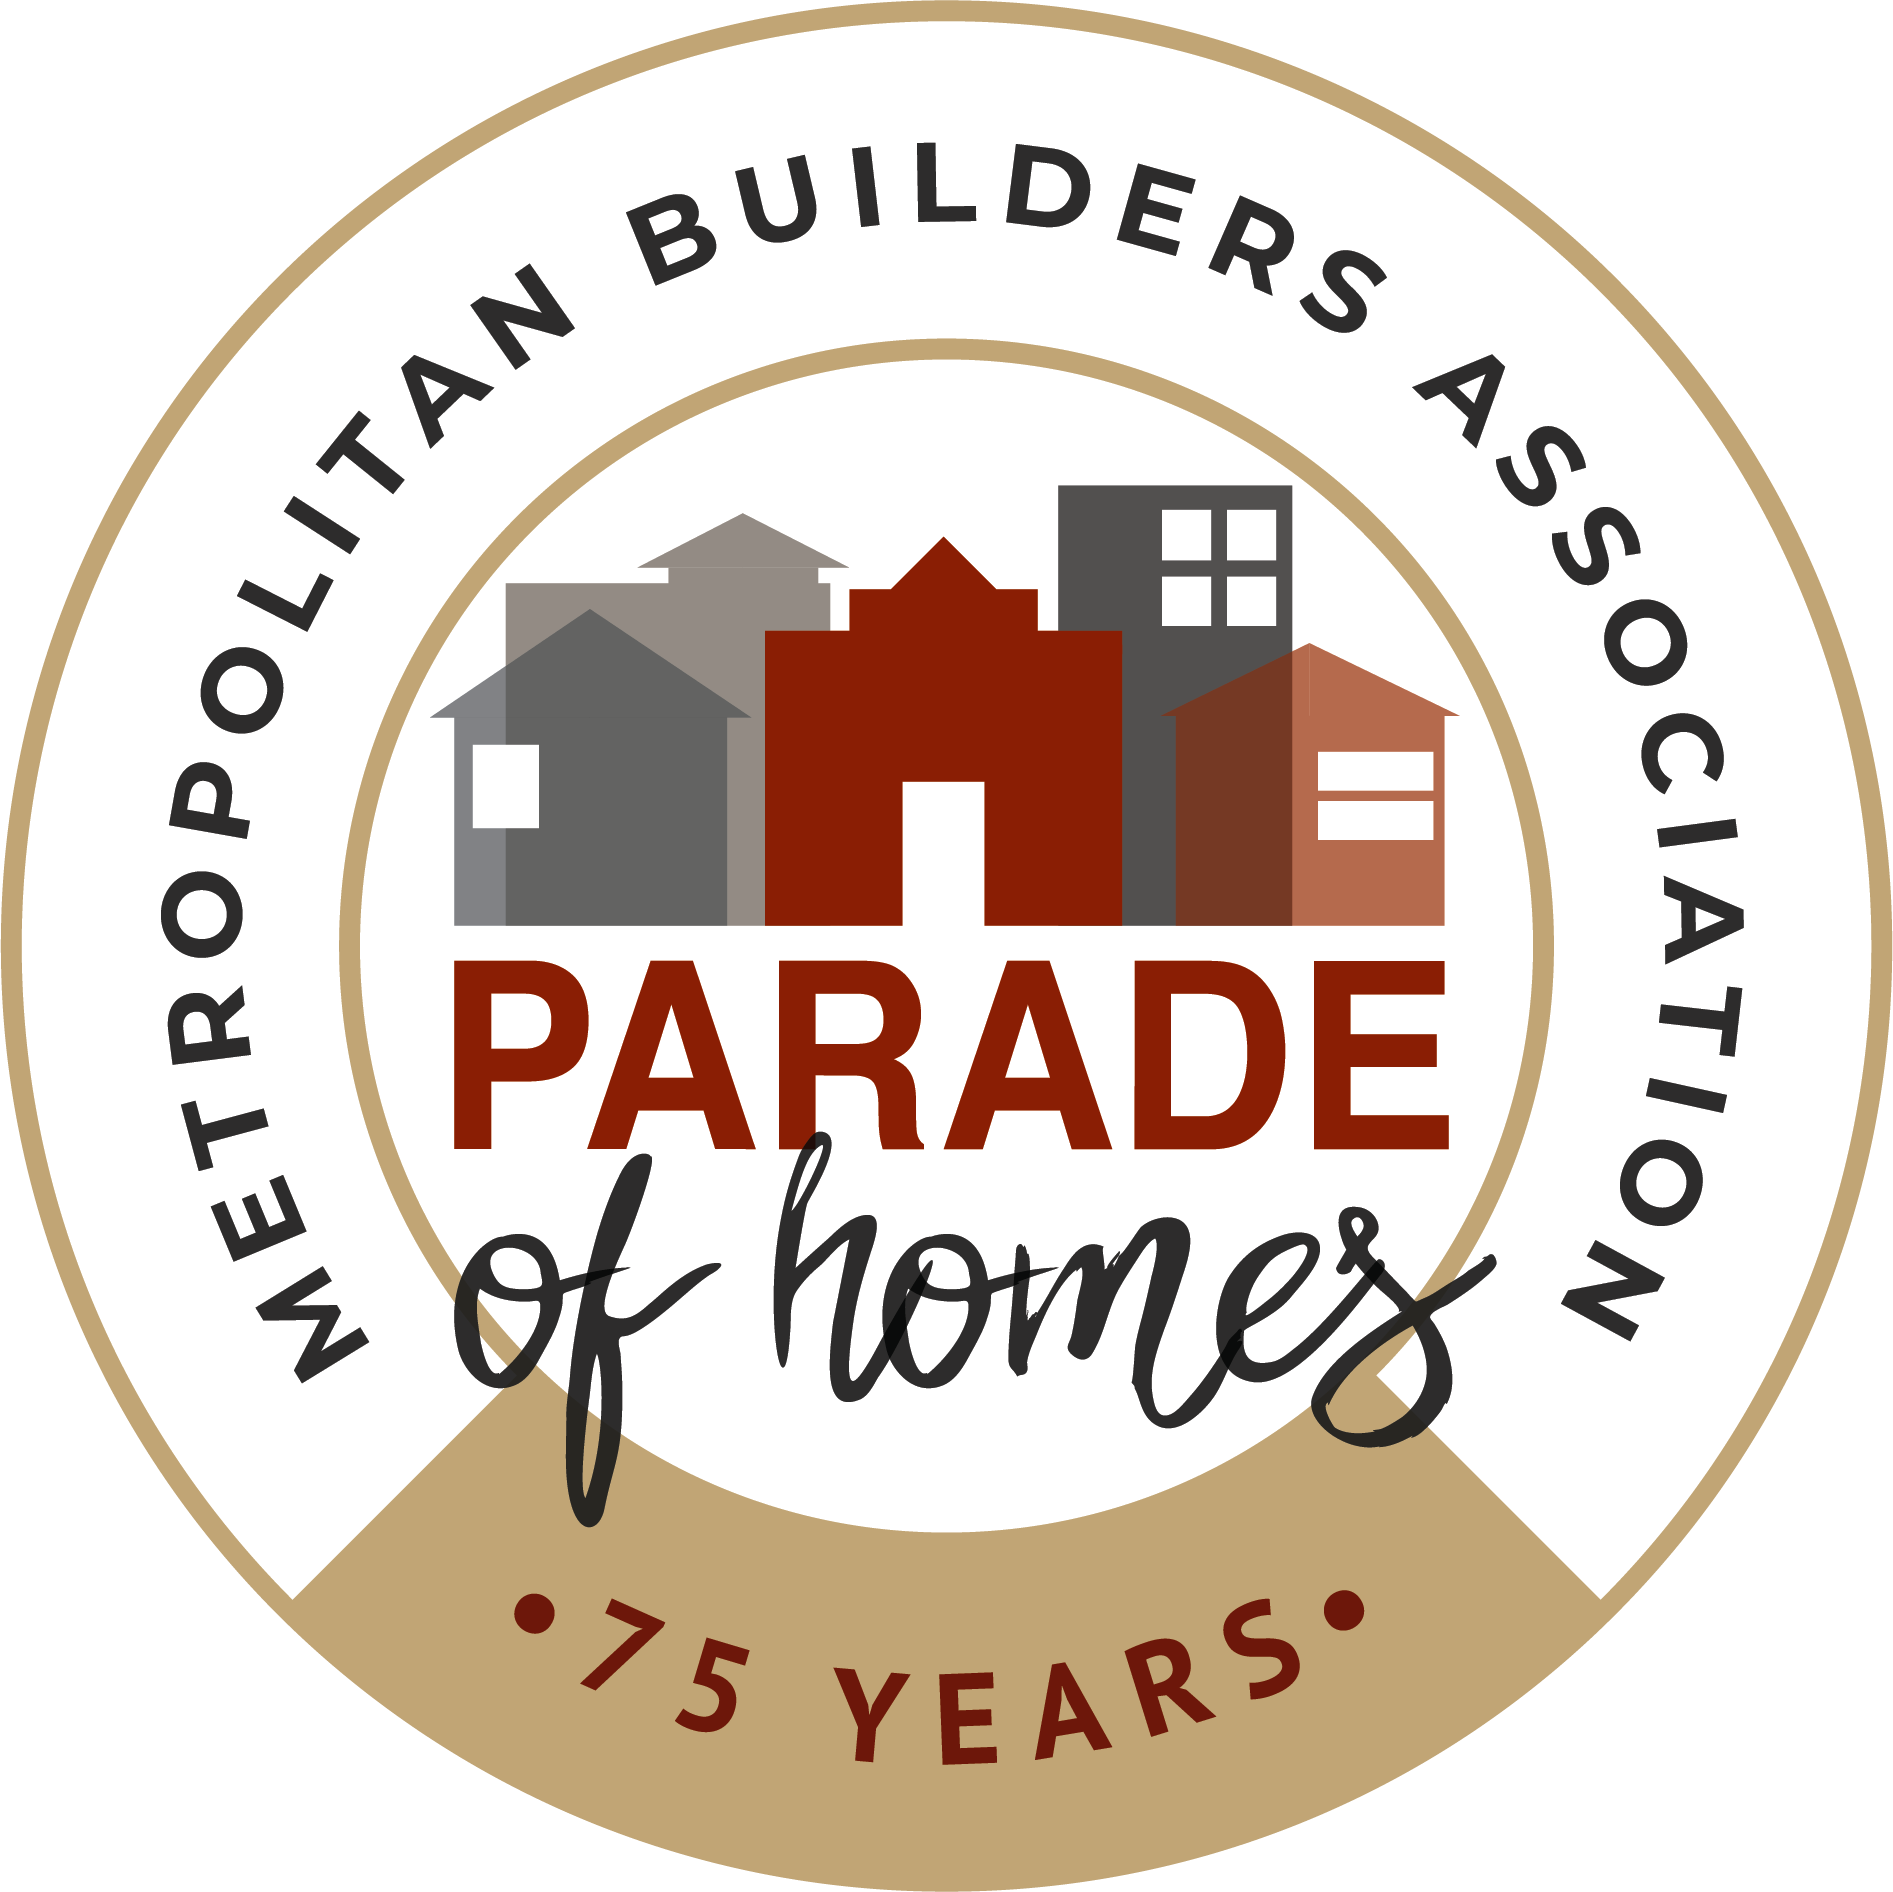 MBA Parade of Homes logo - 75 years